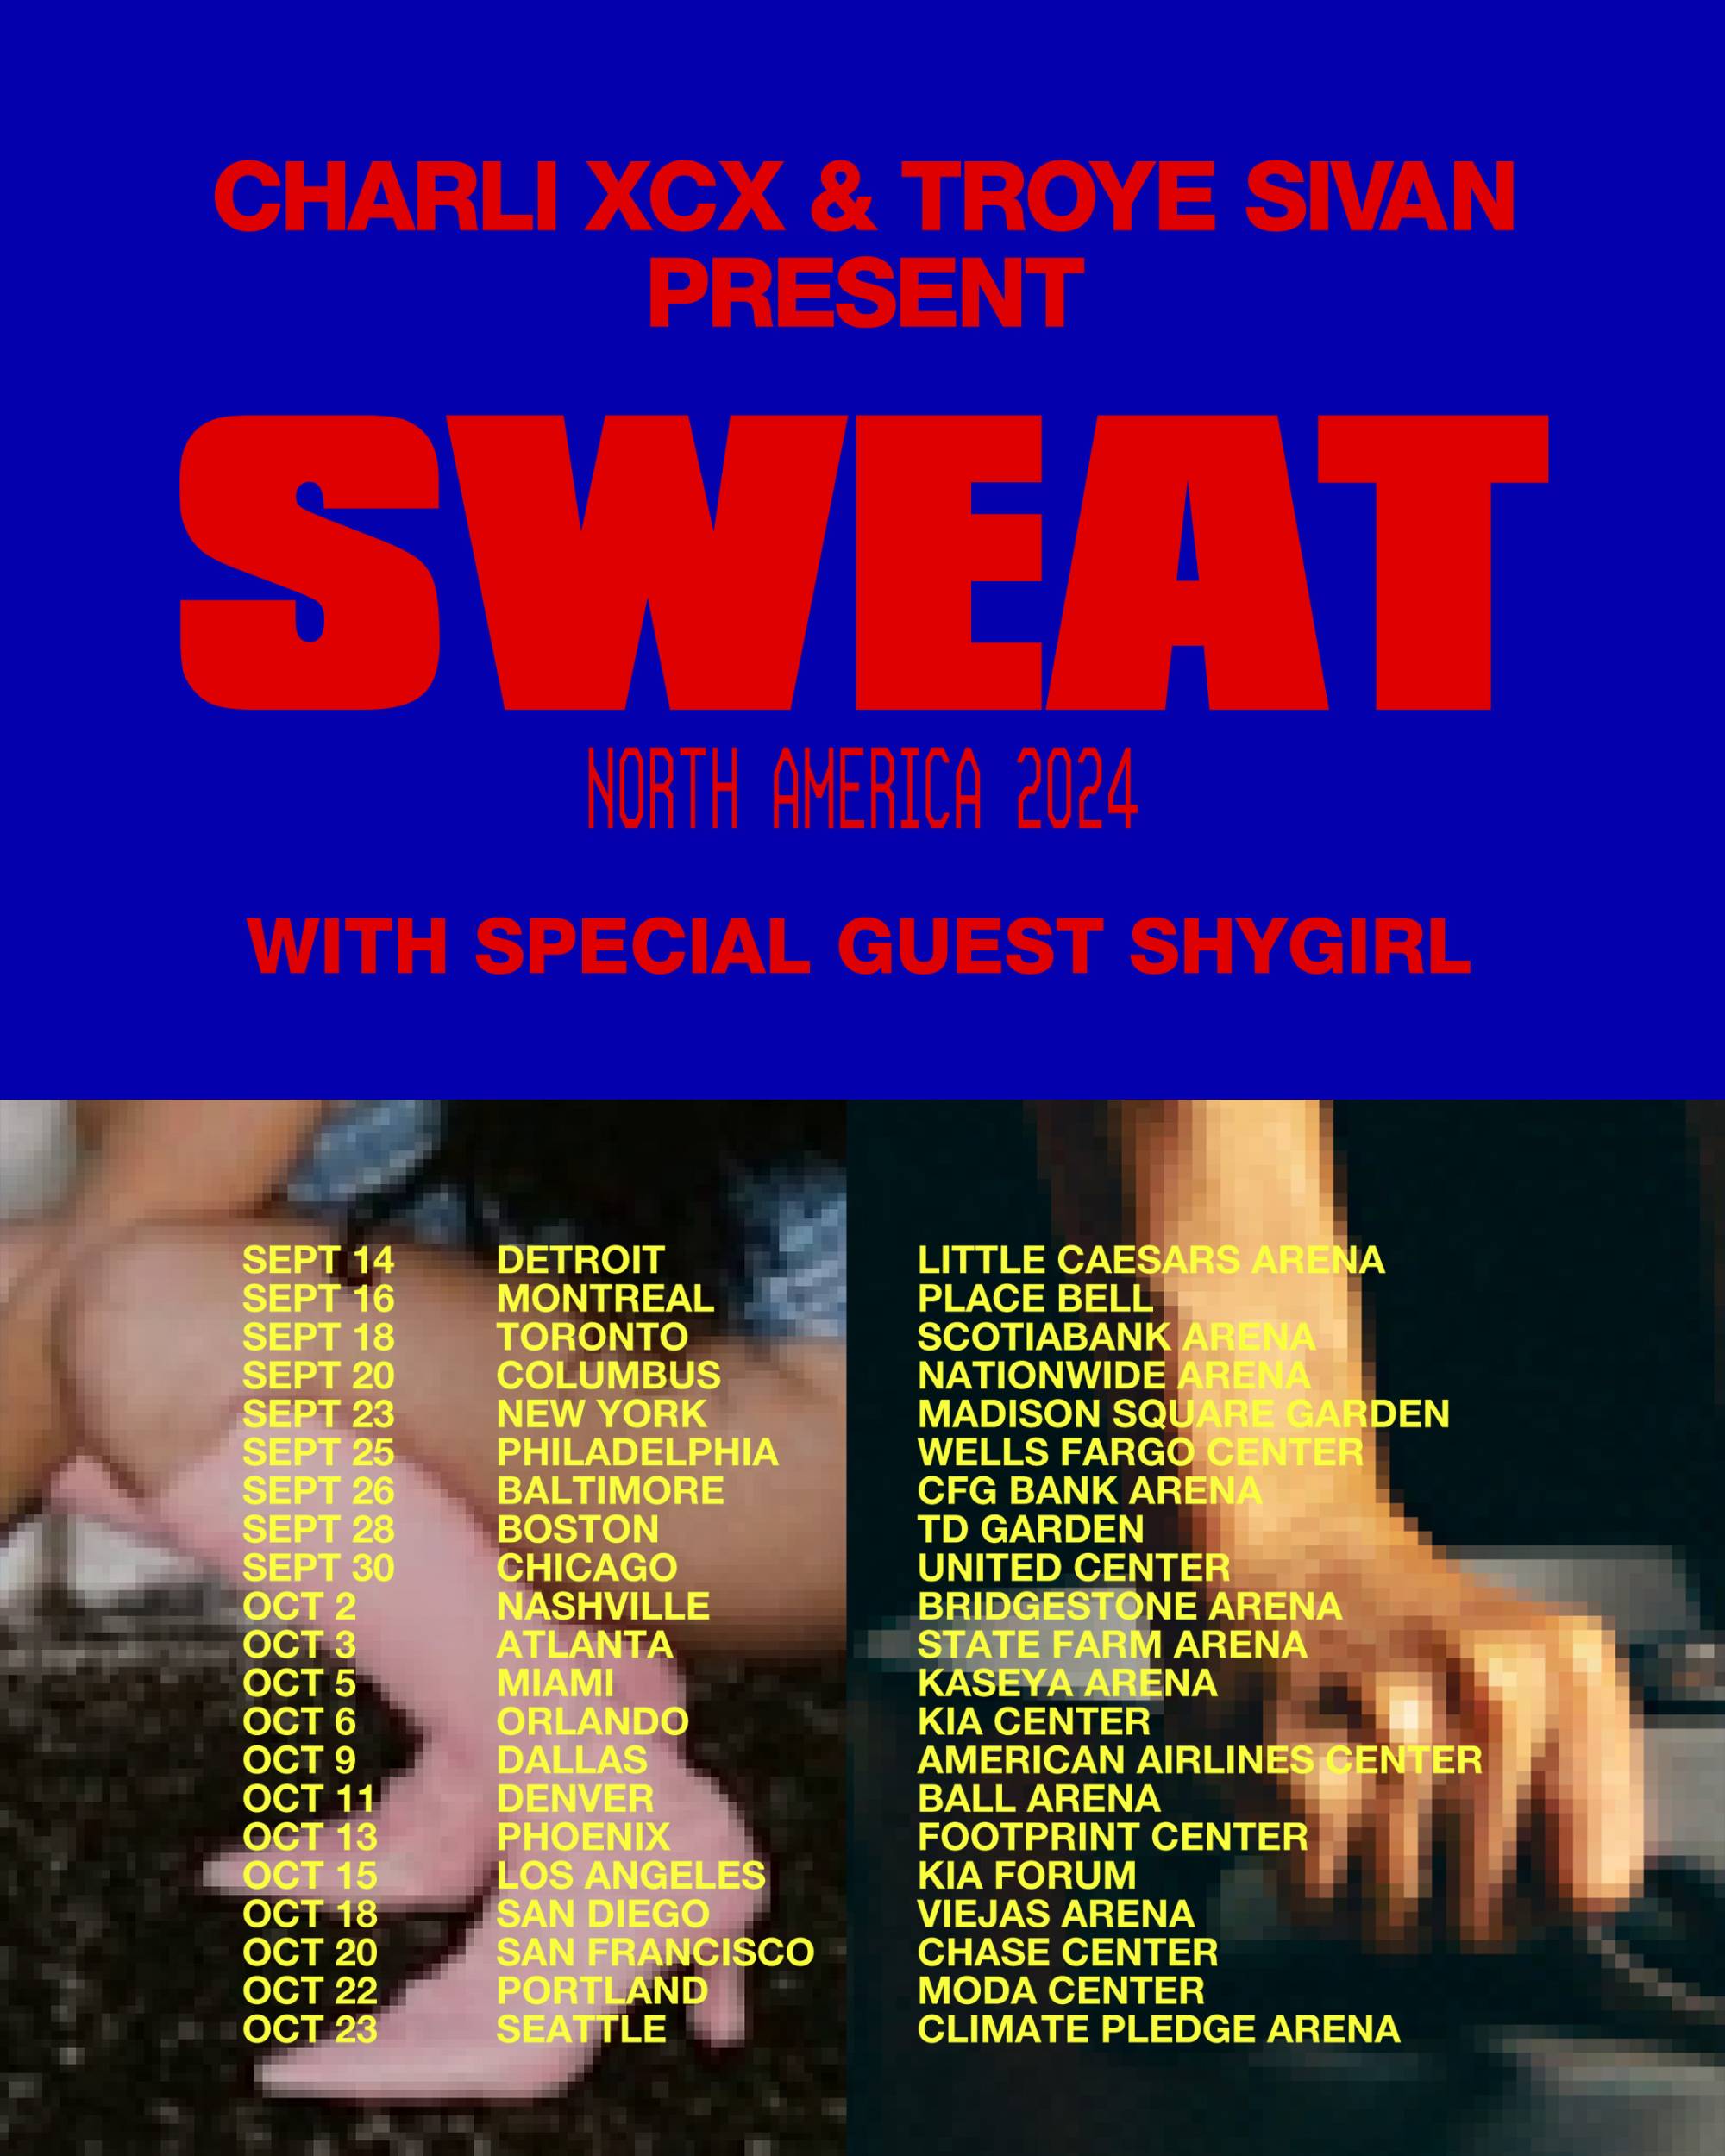 Charli XCX and Troye Sivan 'Sweat' US tour dates poster. Credit: PRESS